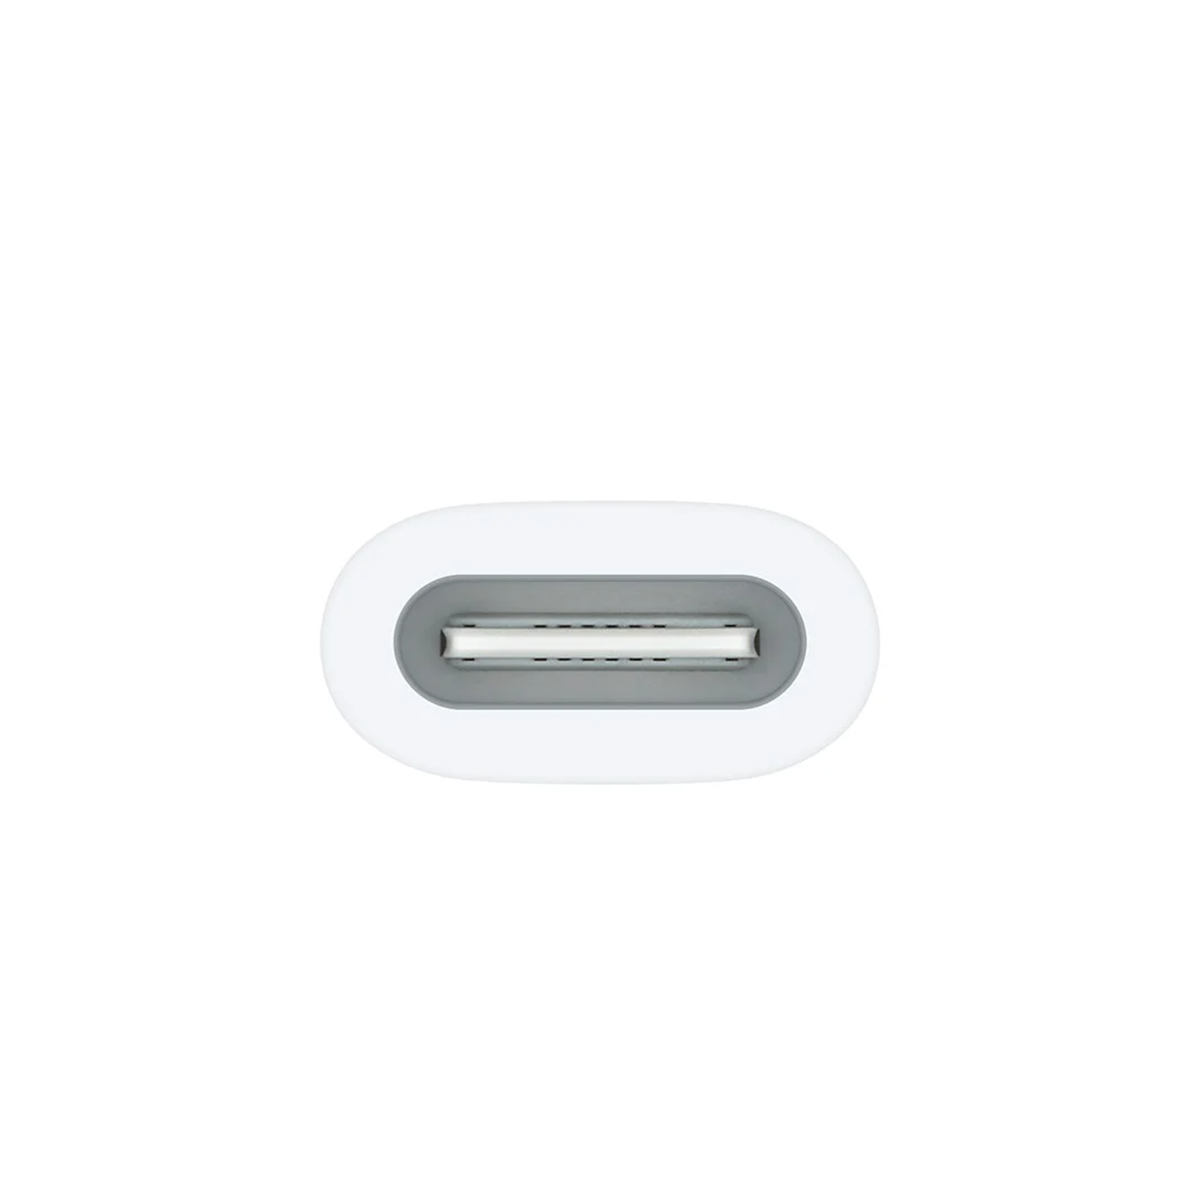  Bộ chuyển đổi Apple Adapter USB-C to Apple Pencil 